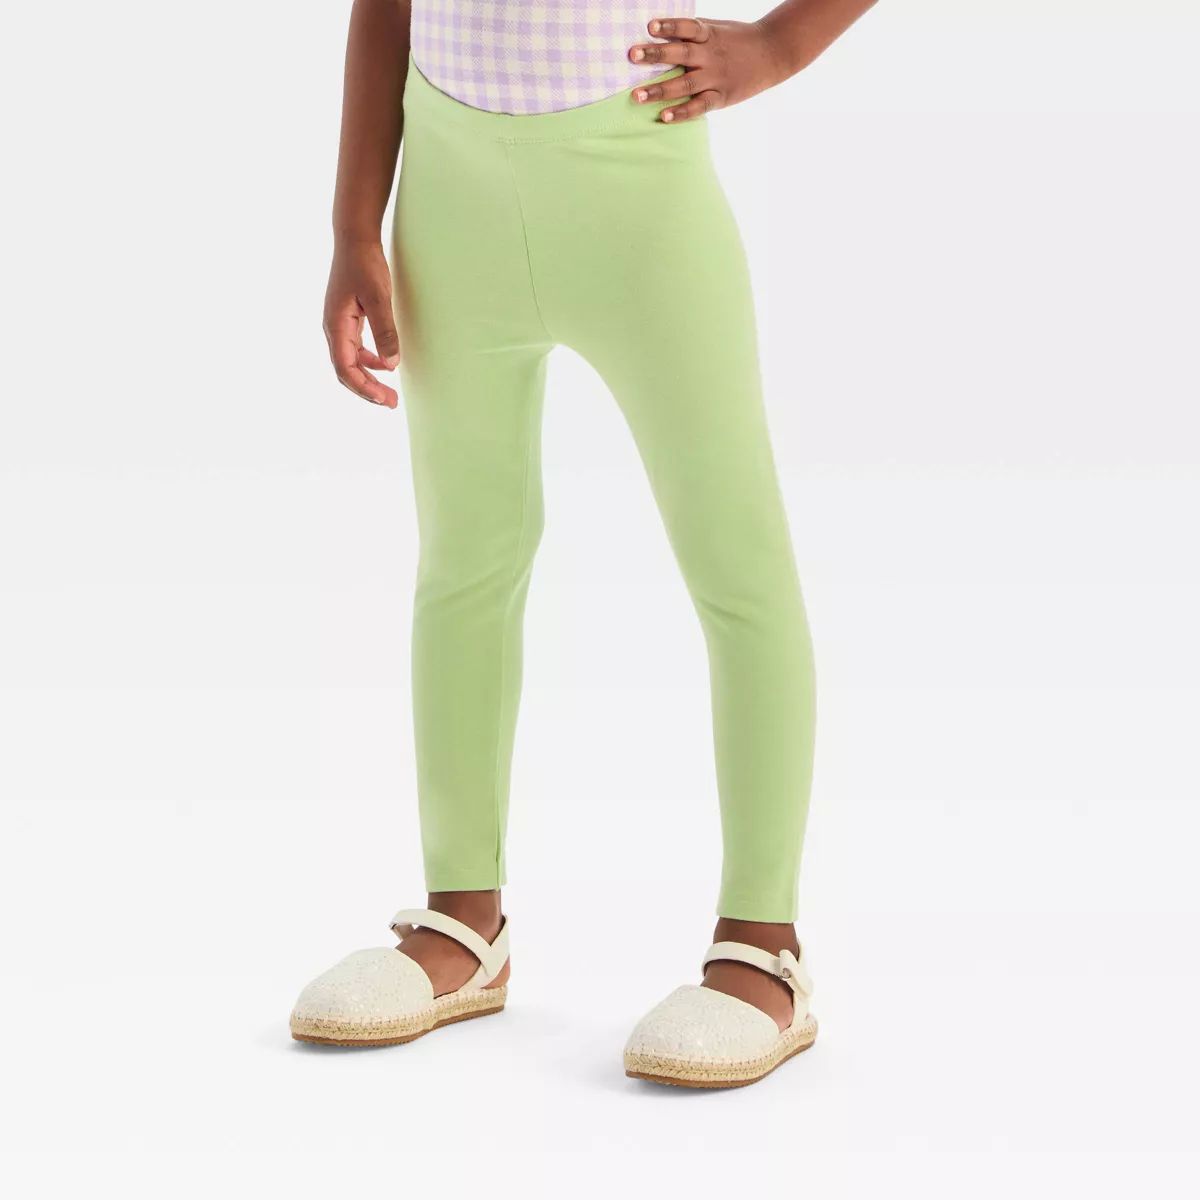 Toddler Girls' Leggings - Cat & Jack™ Green 4T | Target